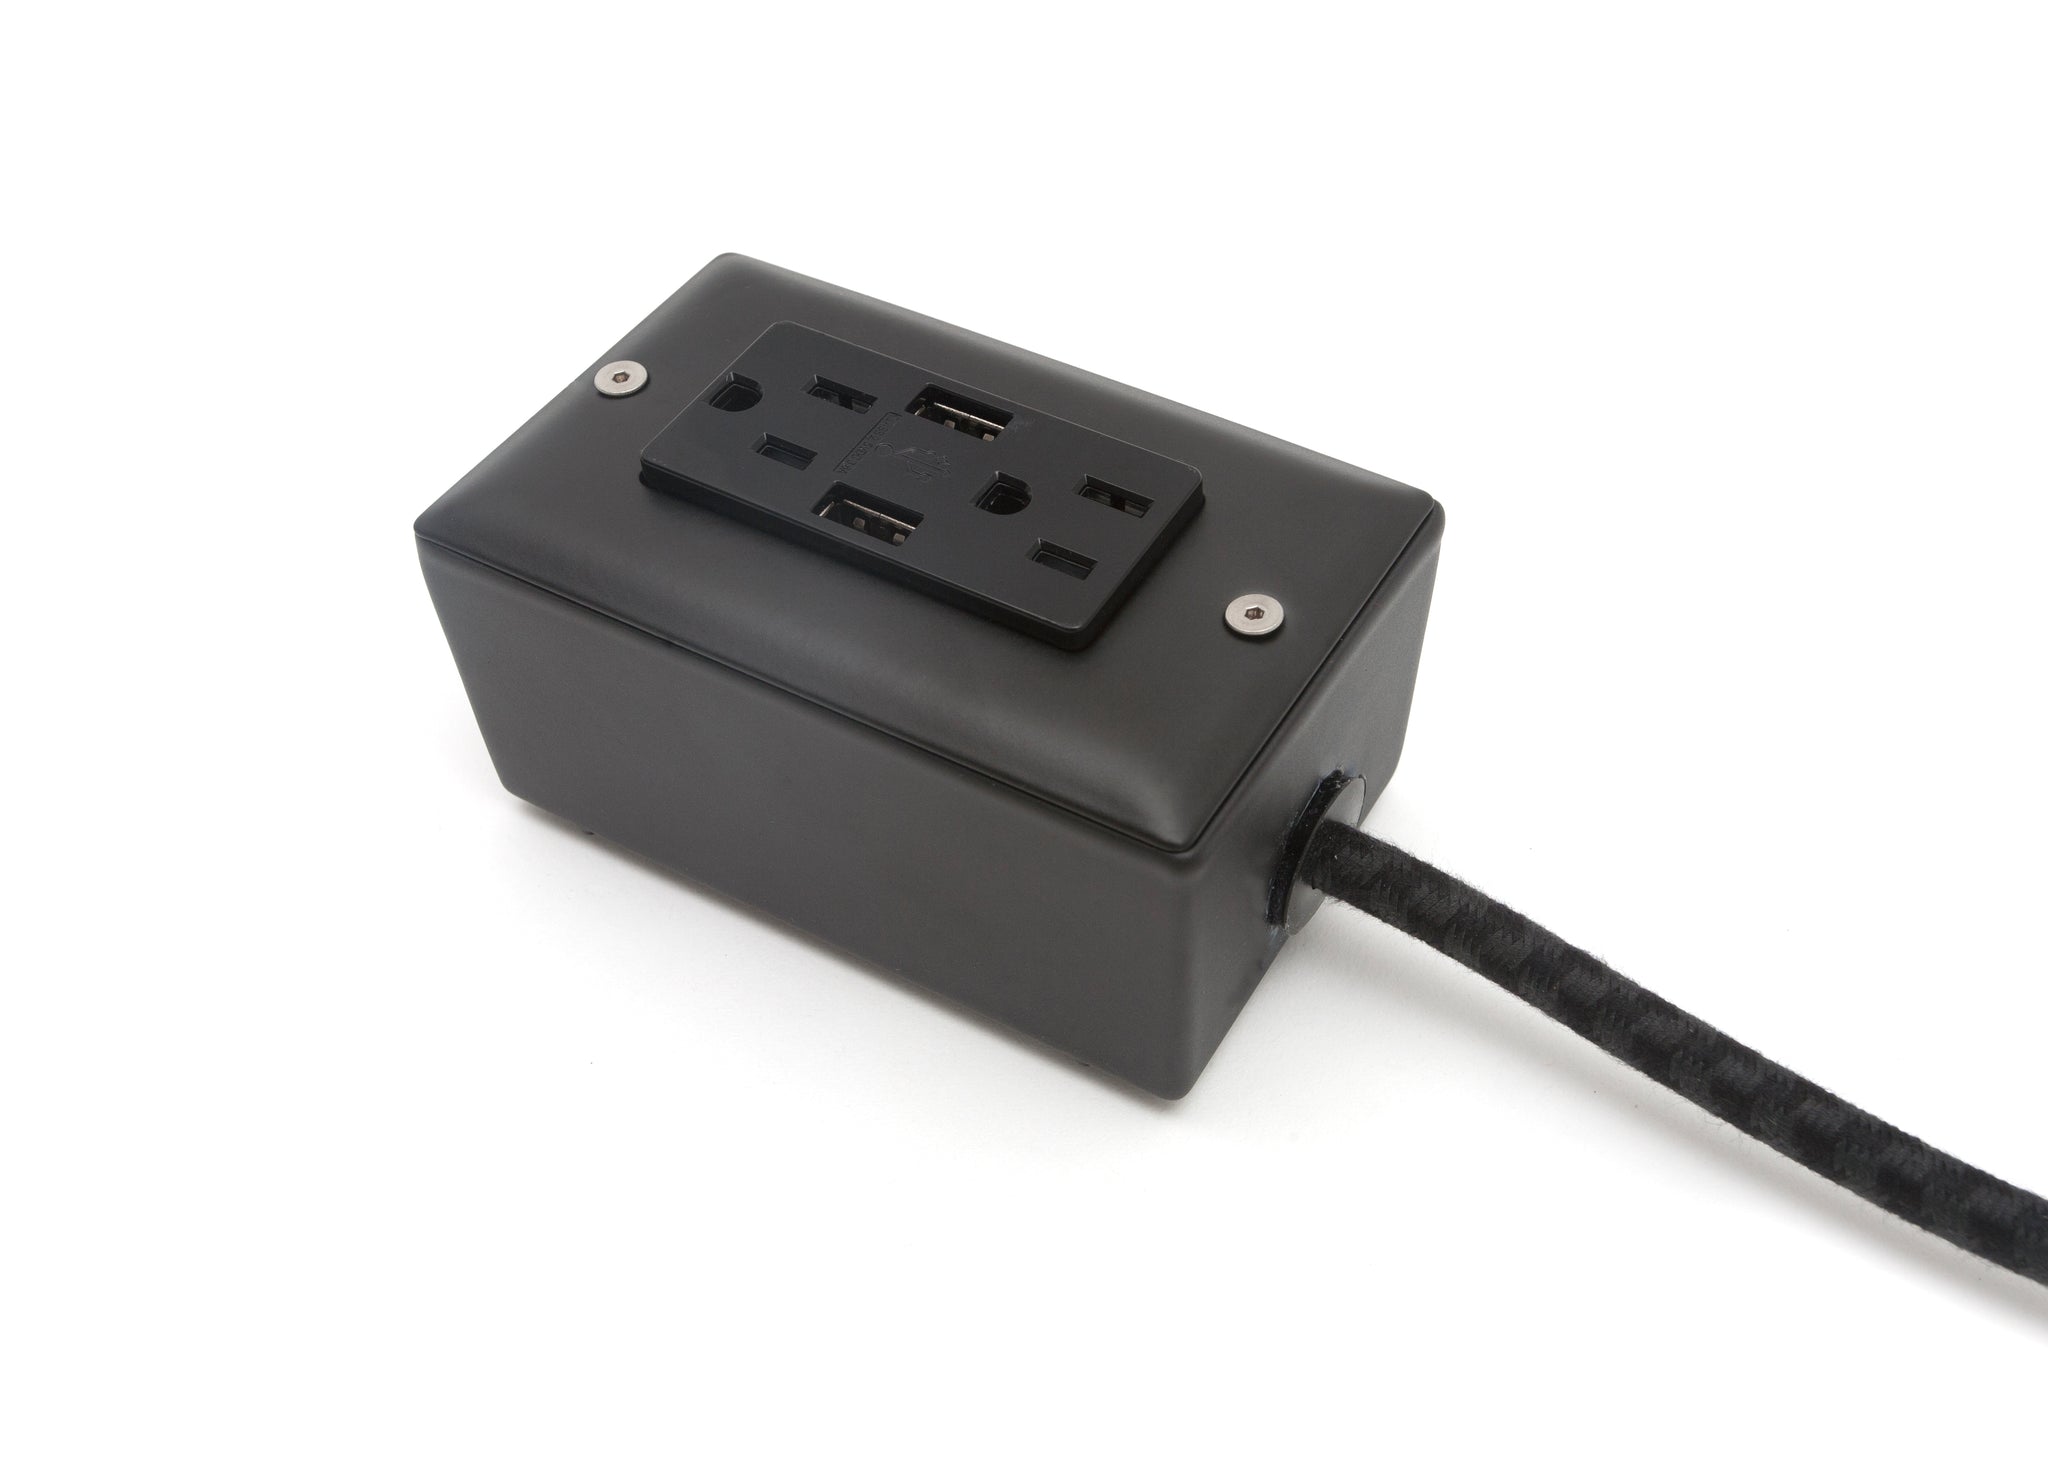 The First Smart Chip Extension Cord - 12' Extō Dual-USB, Dual-Outlet - Carrara (Matte) Black